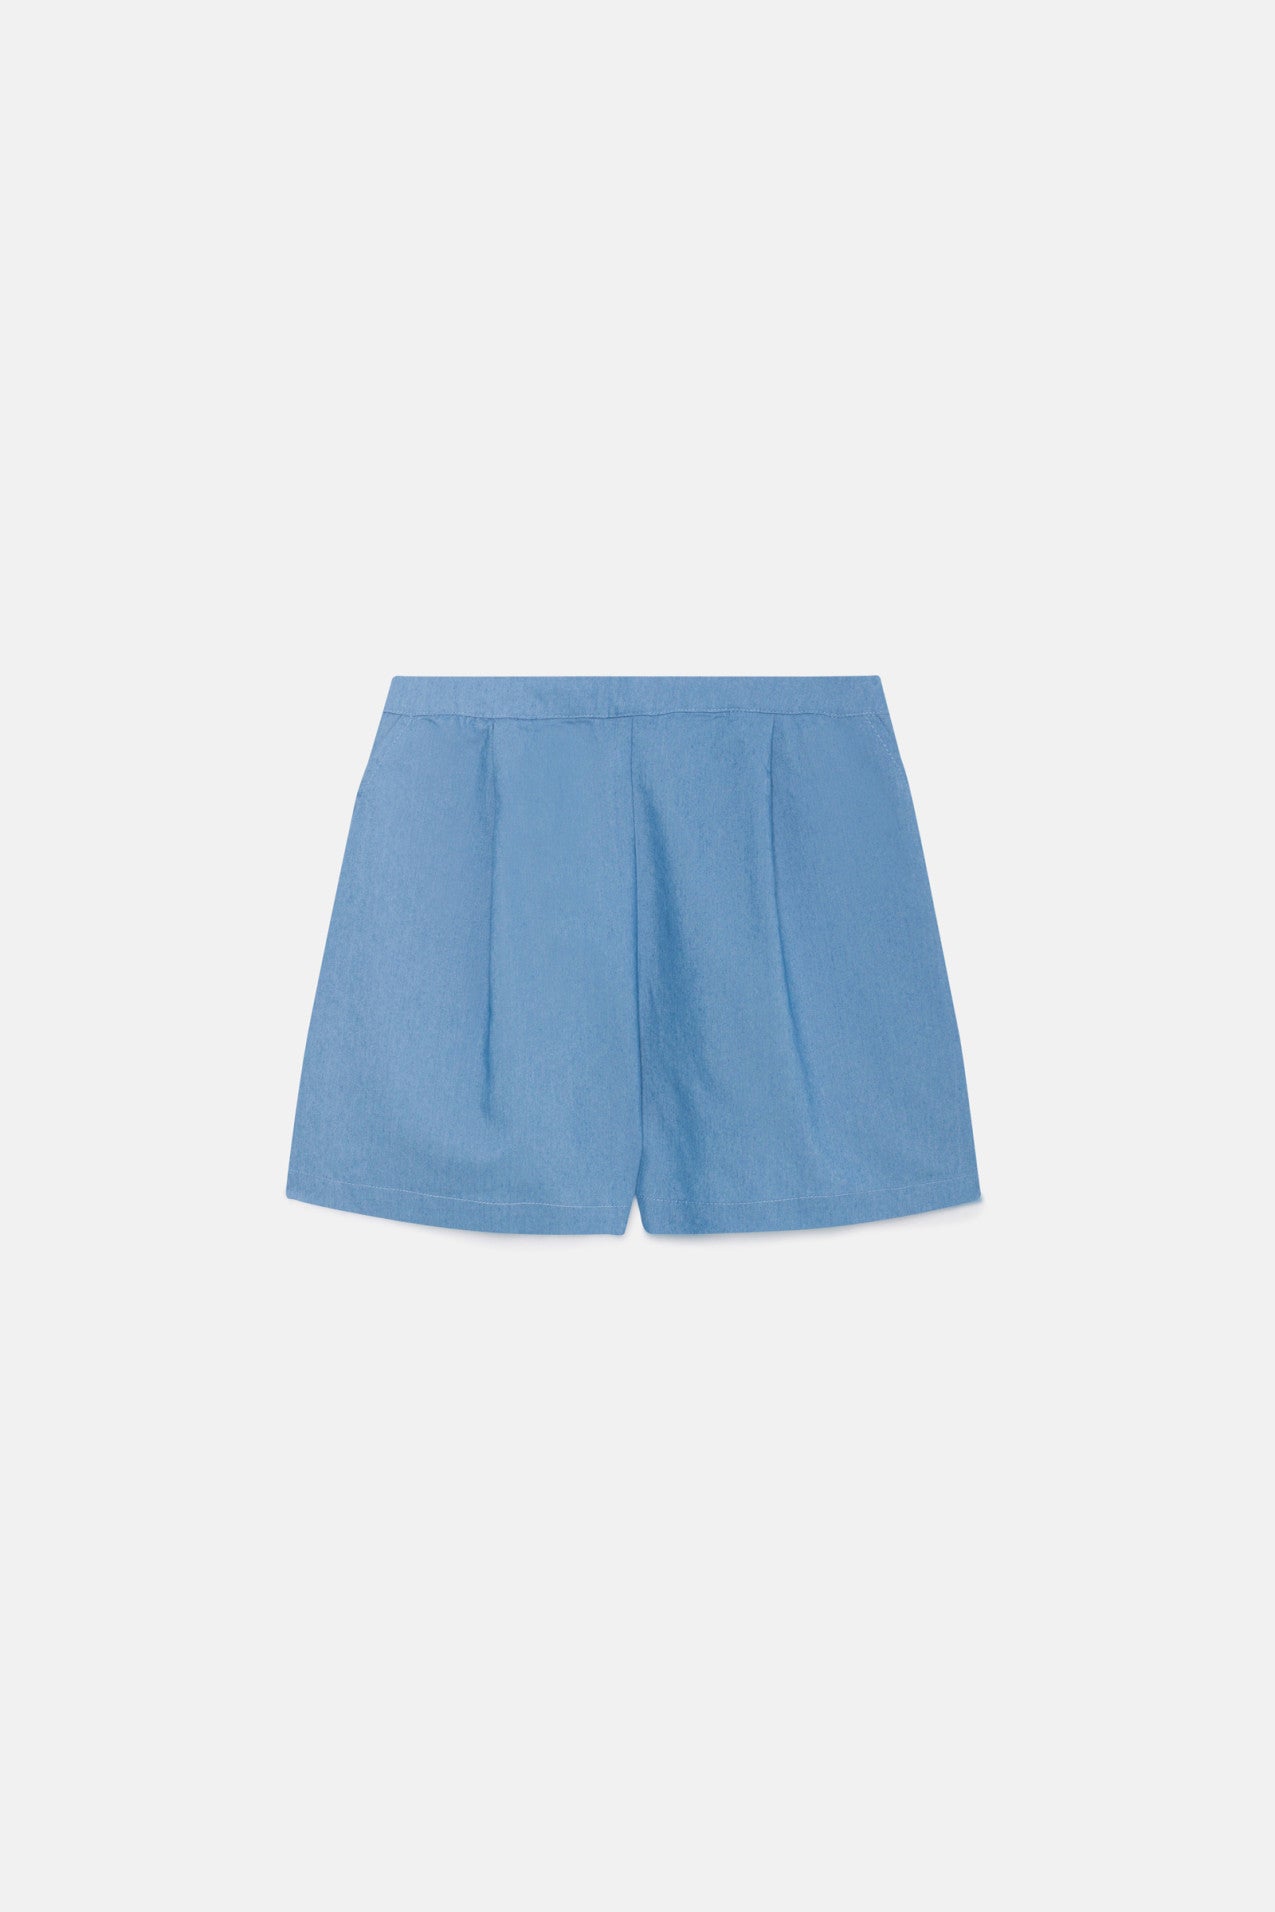 Blue mid-rise denim shorts